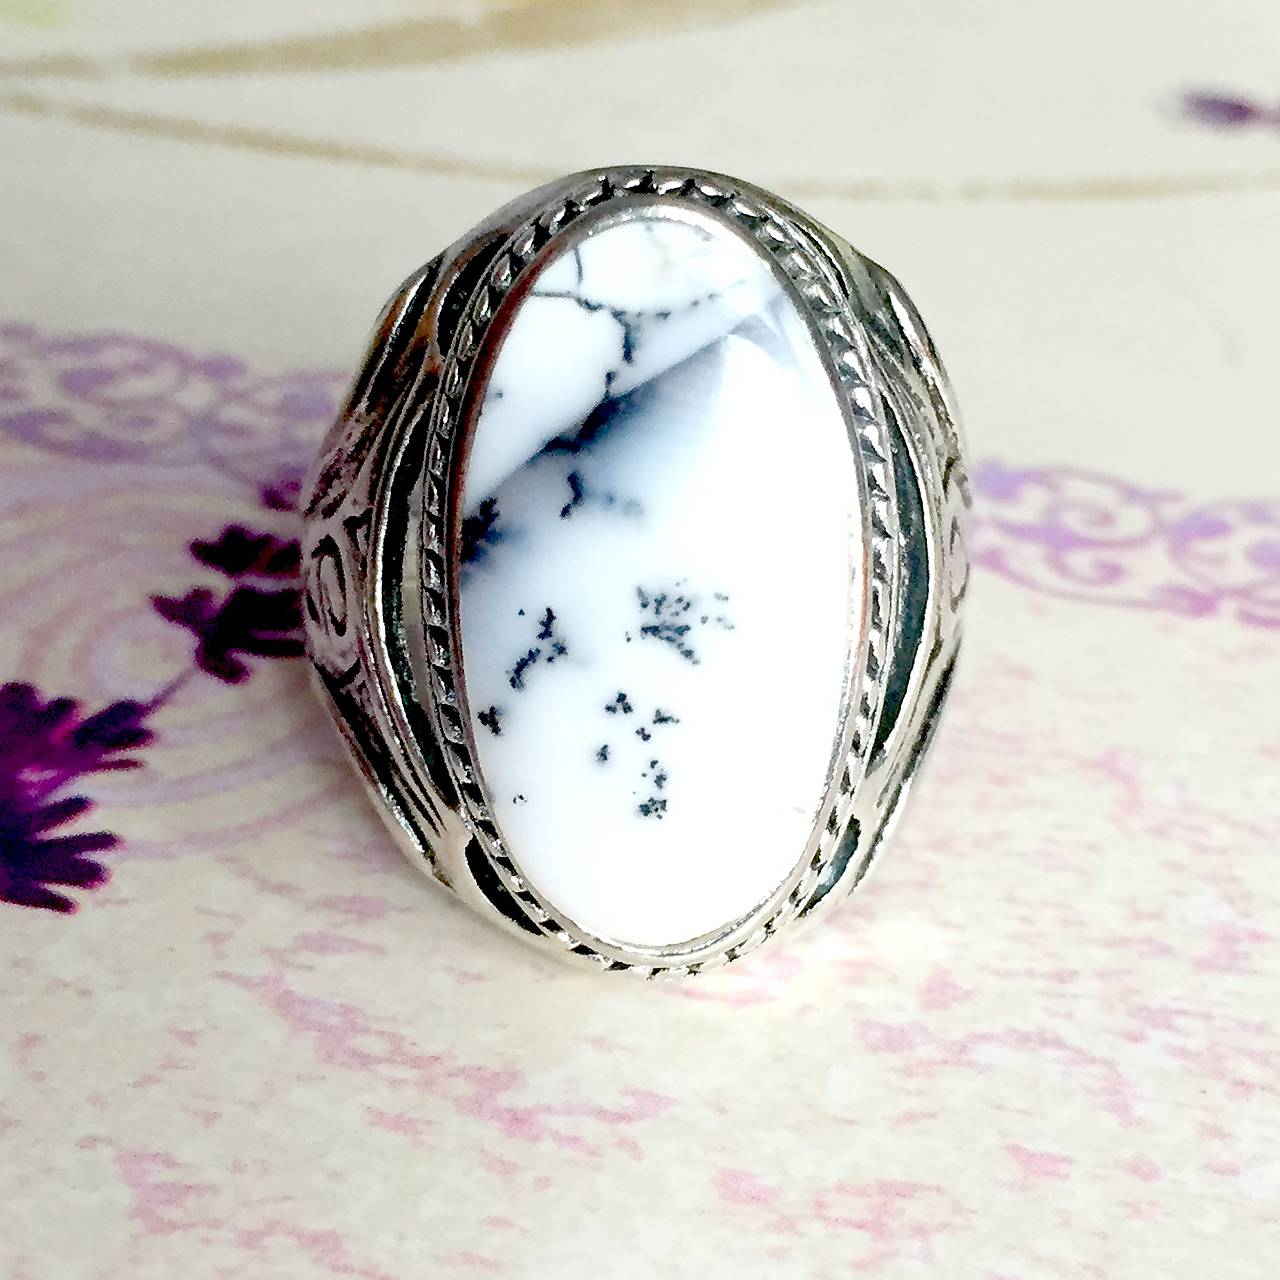 Dendritic Opal Massive Ring / Prsteň s dendritickým opálom #1511